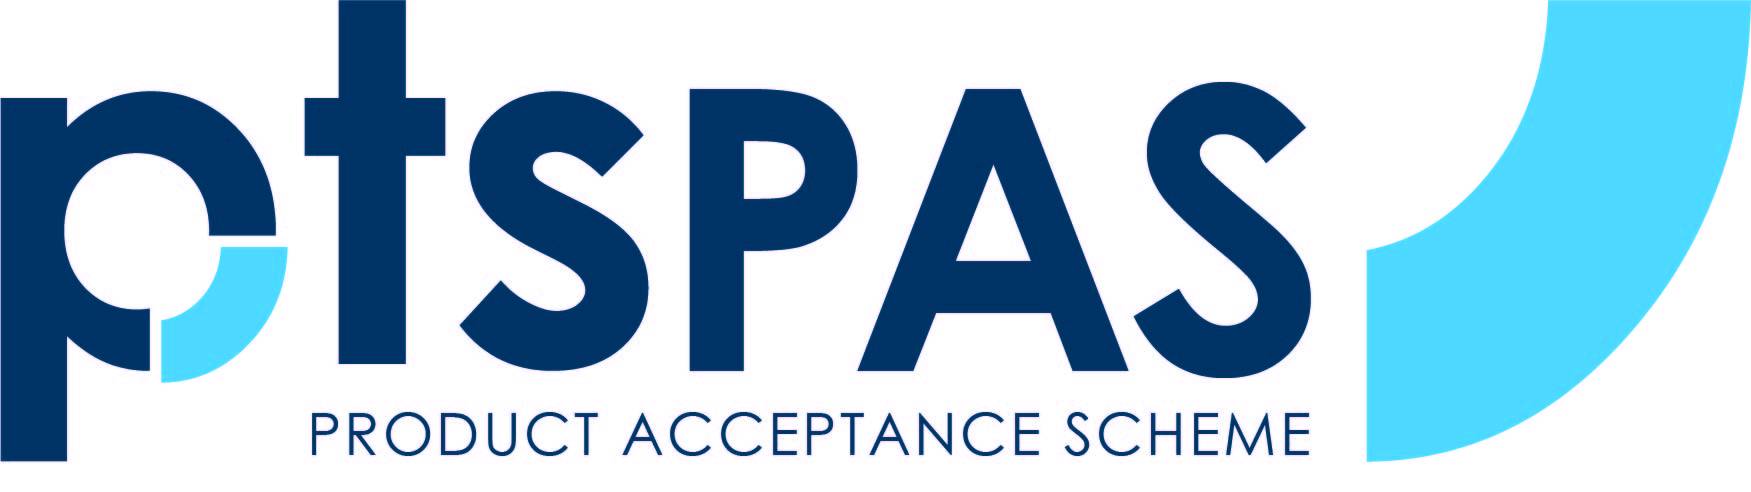 PTSPAS Product Assessment Certificate